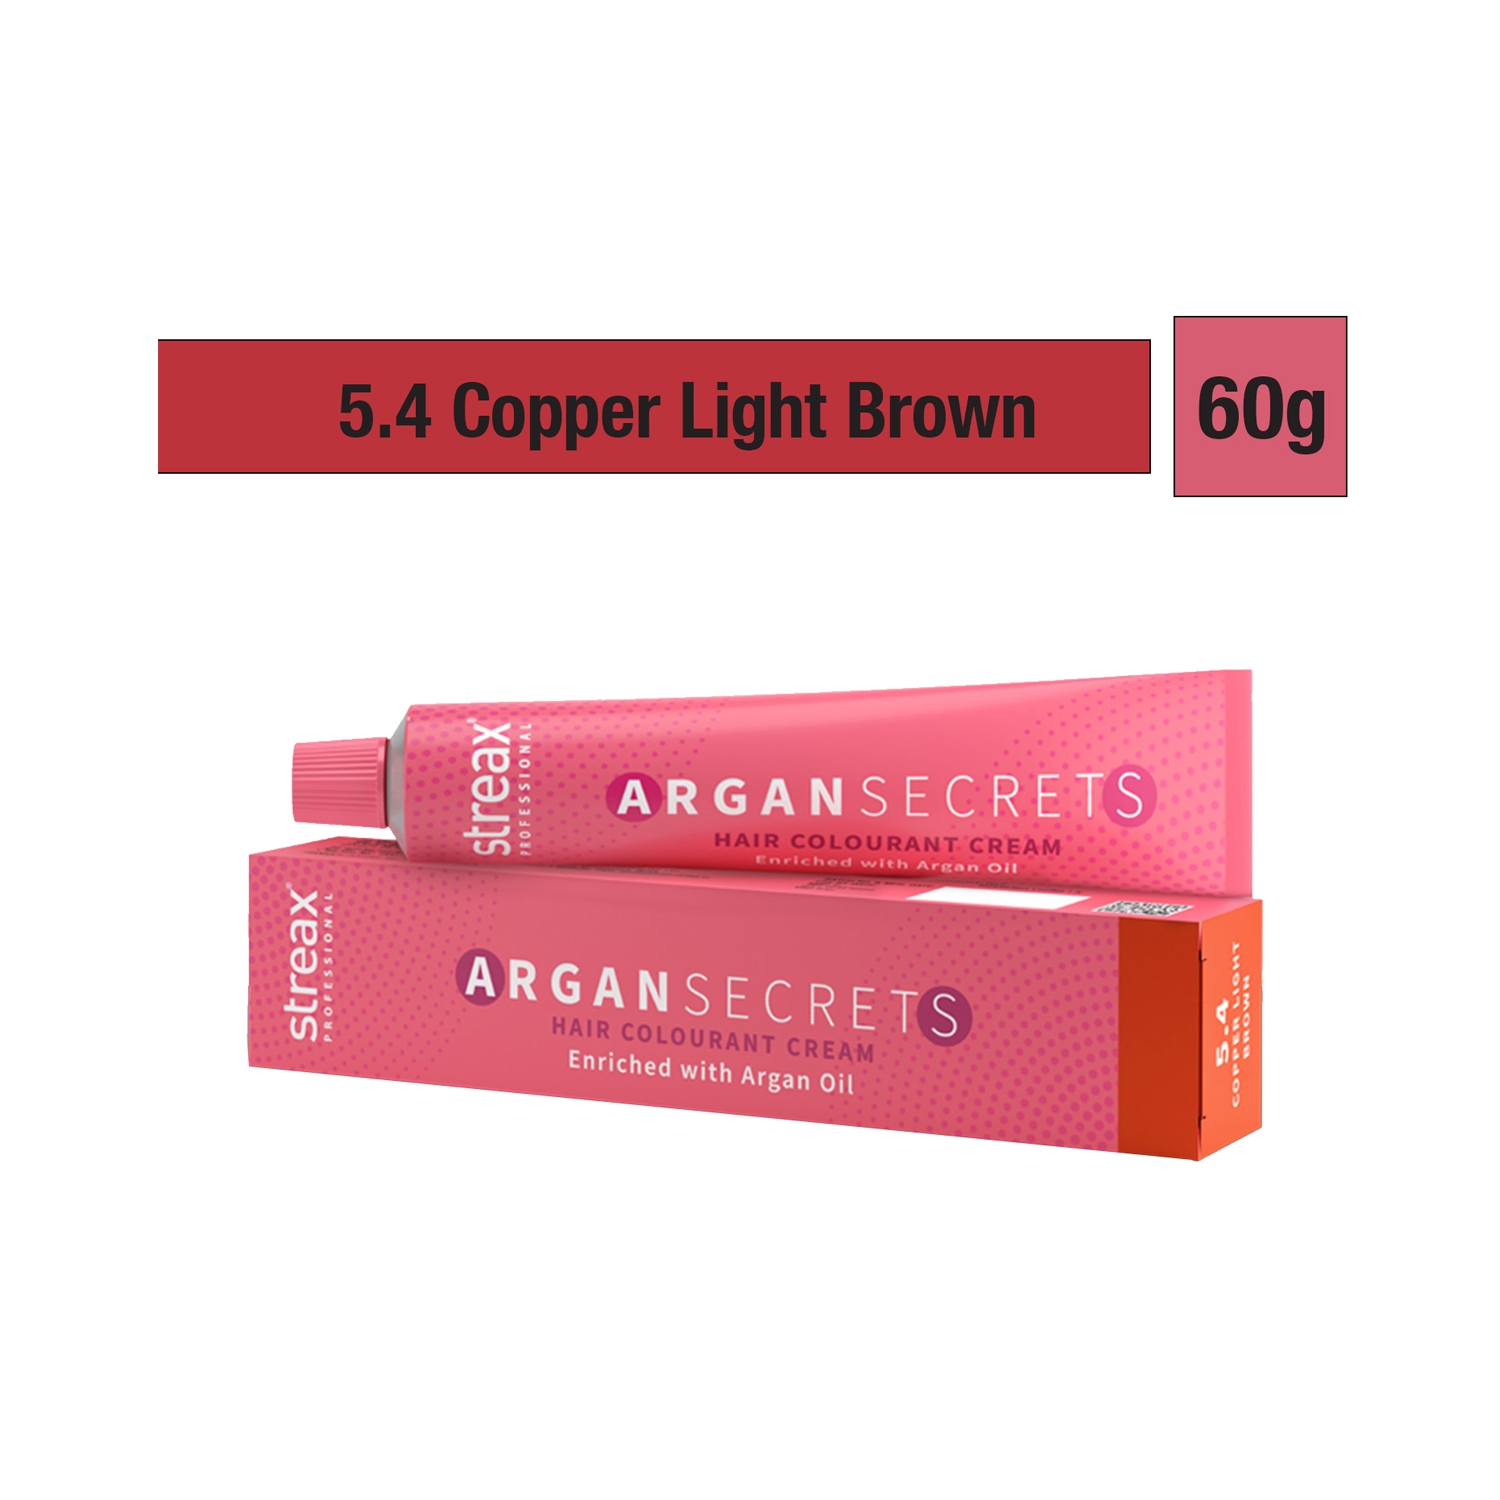 Streax Professional Argan Secrets Hair Colorant Cream - 5.4 Copper Light Brown (60g)